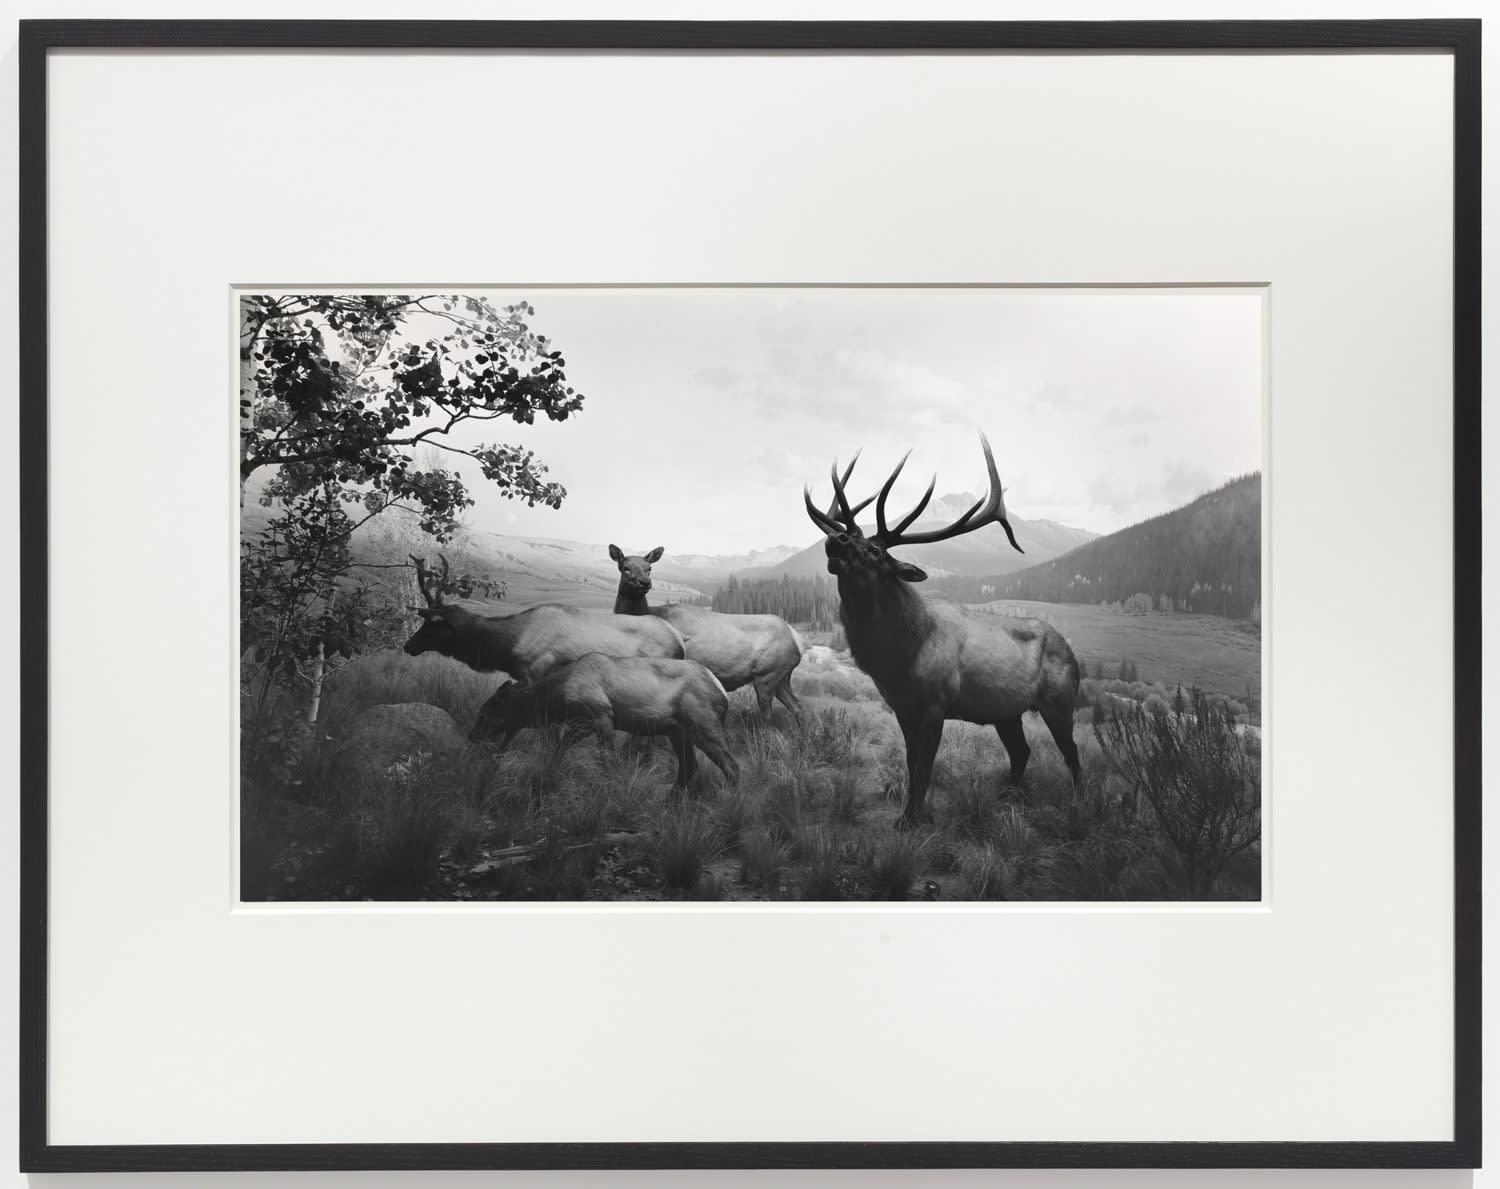 A Hiroshi Sugimoto photograph: 4 elk stand in a grassy plain.